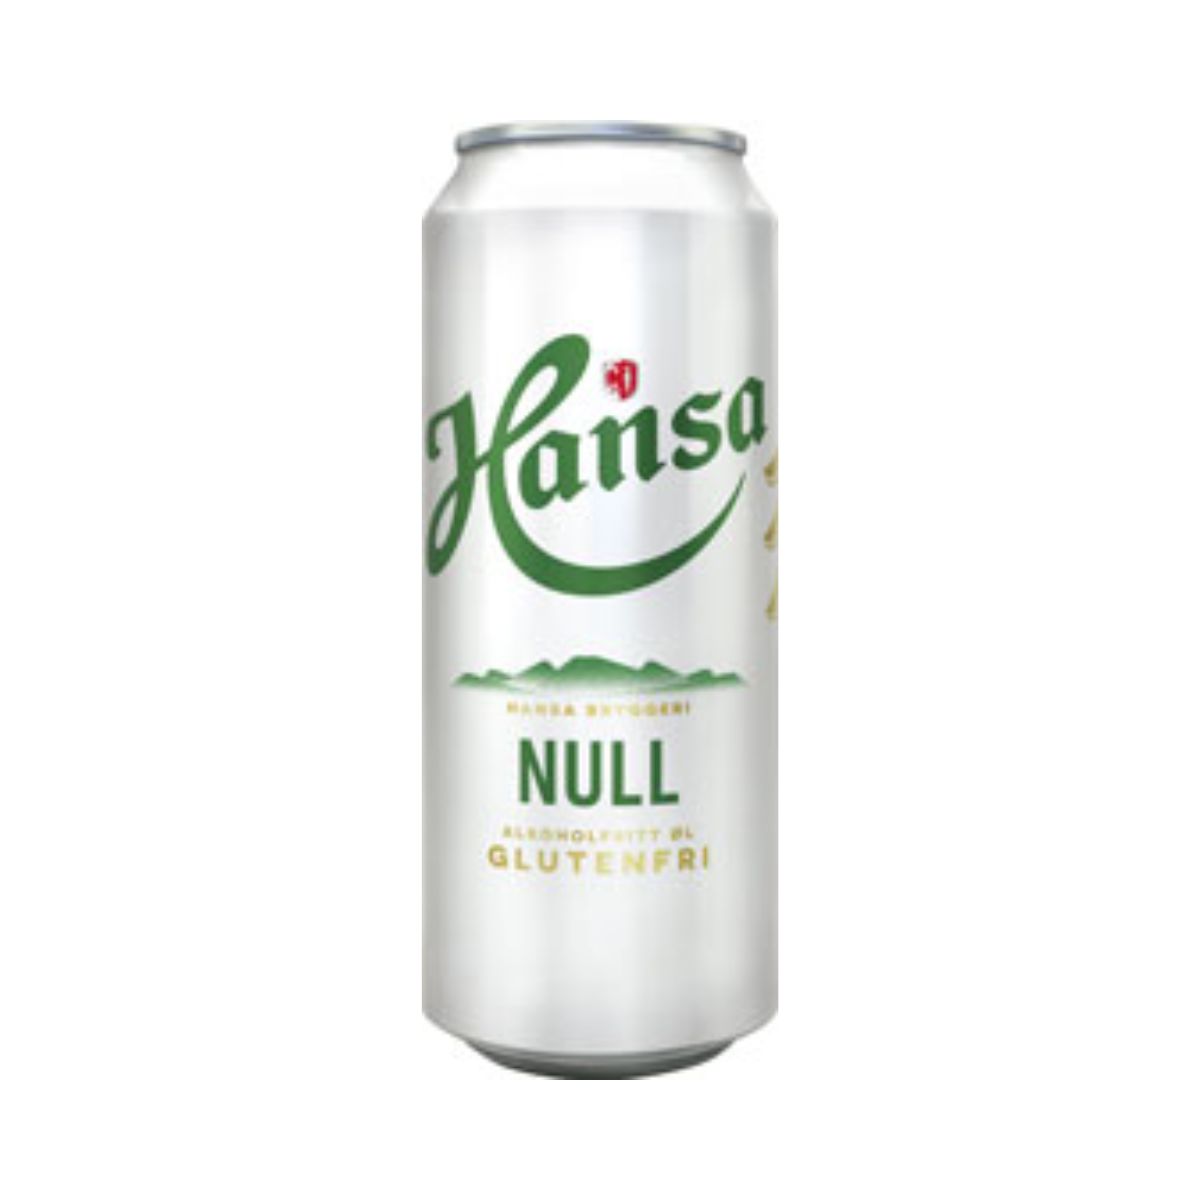 Hansa Null 0.5l bx